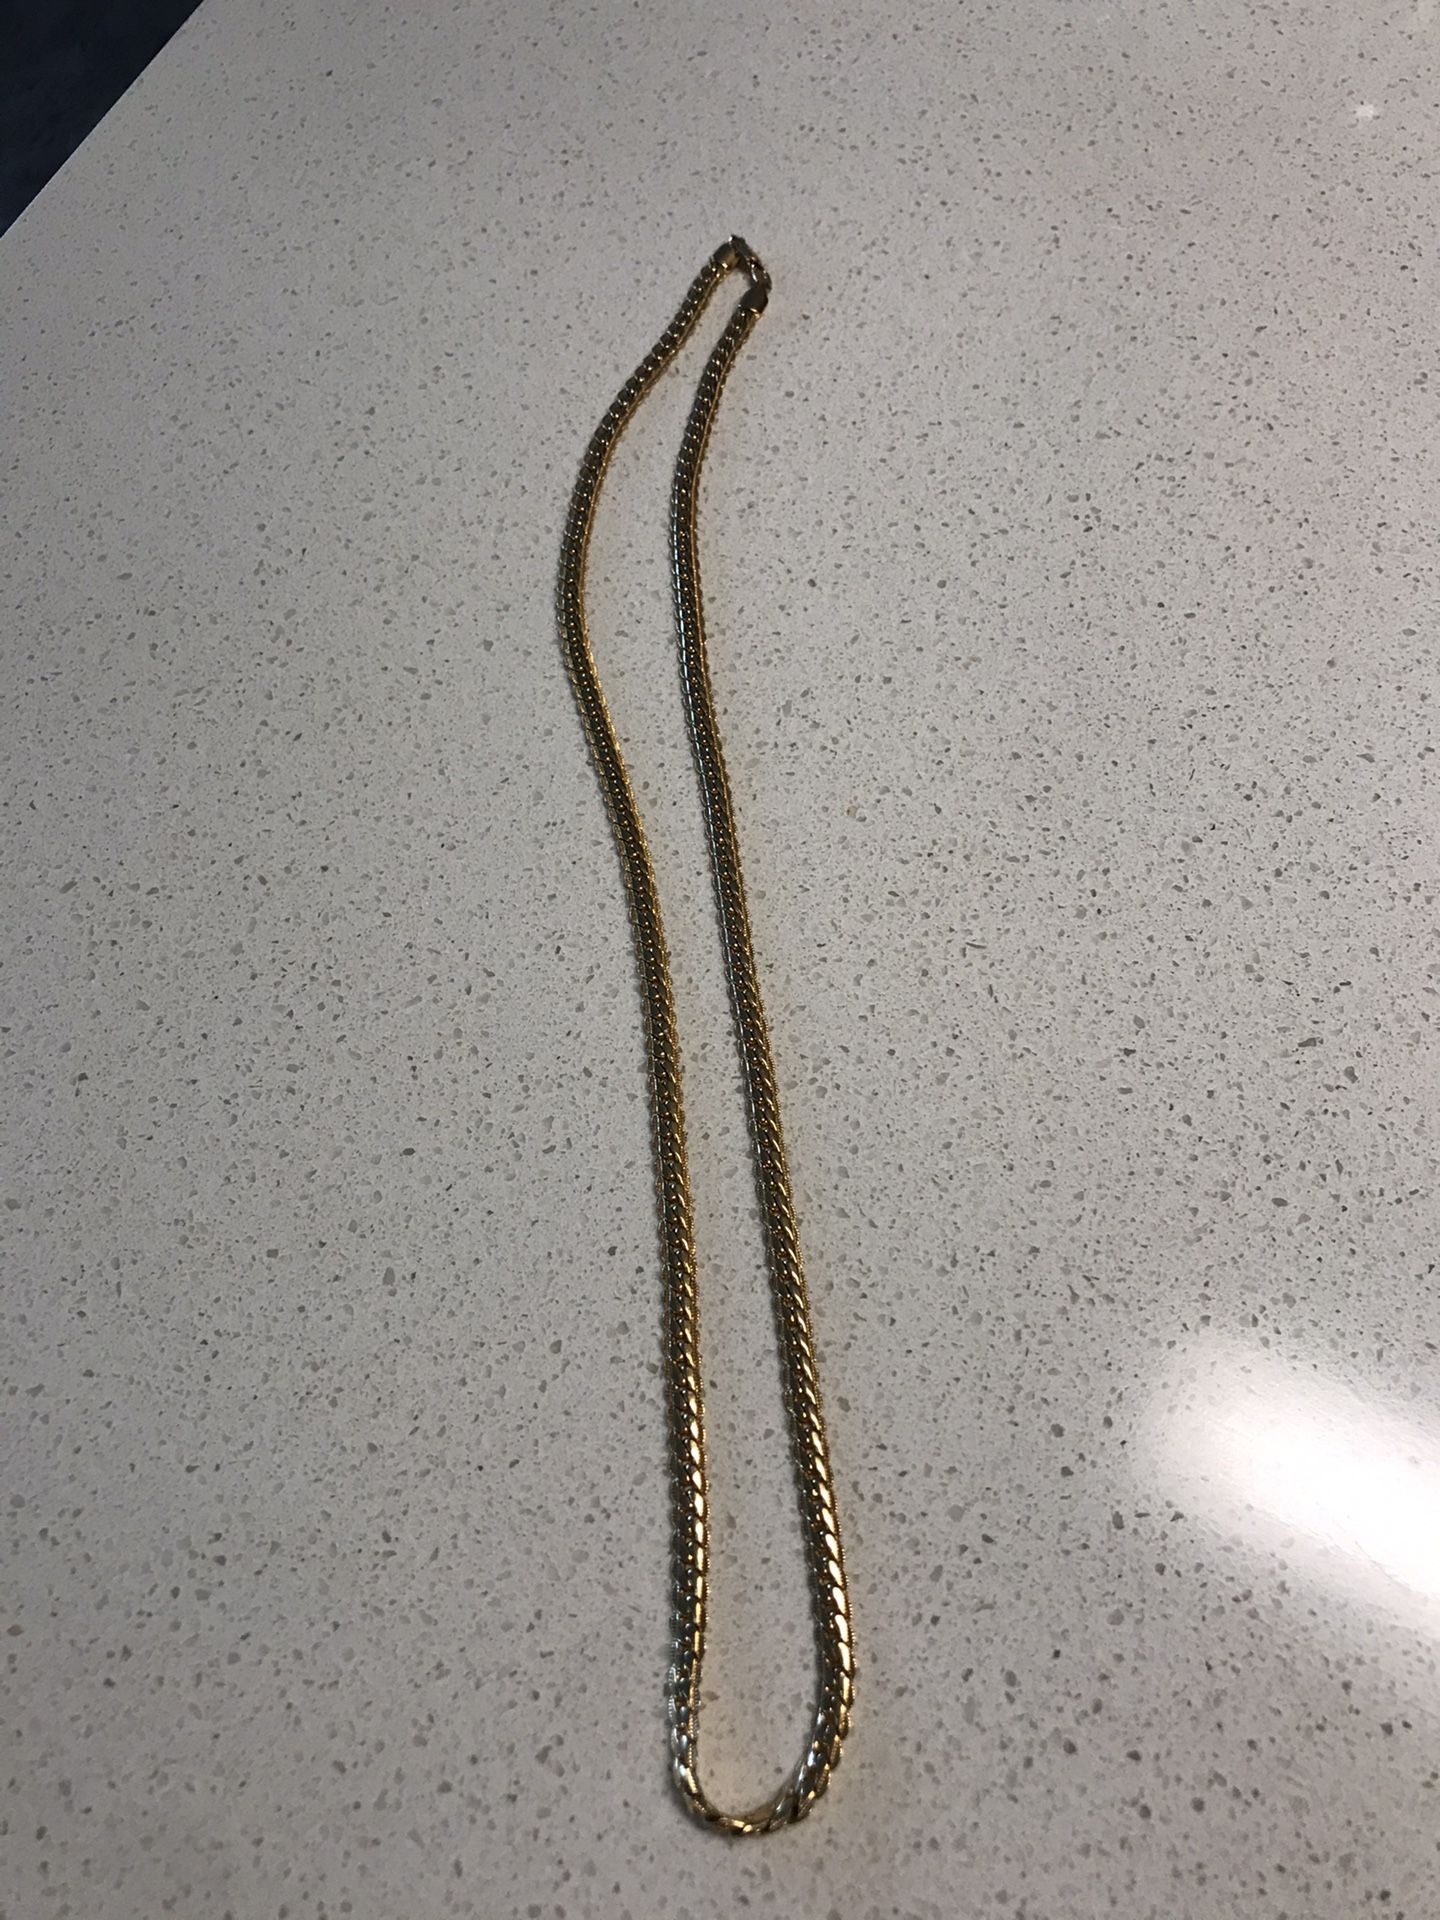 18k gold chain